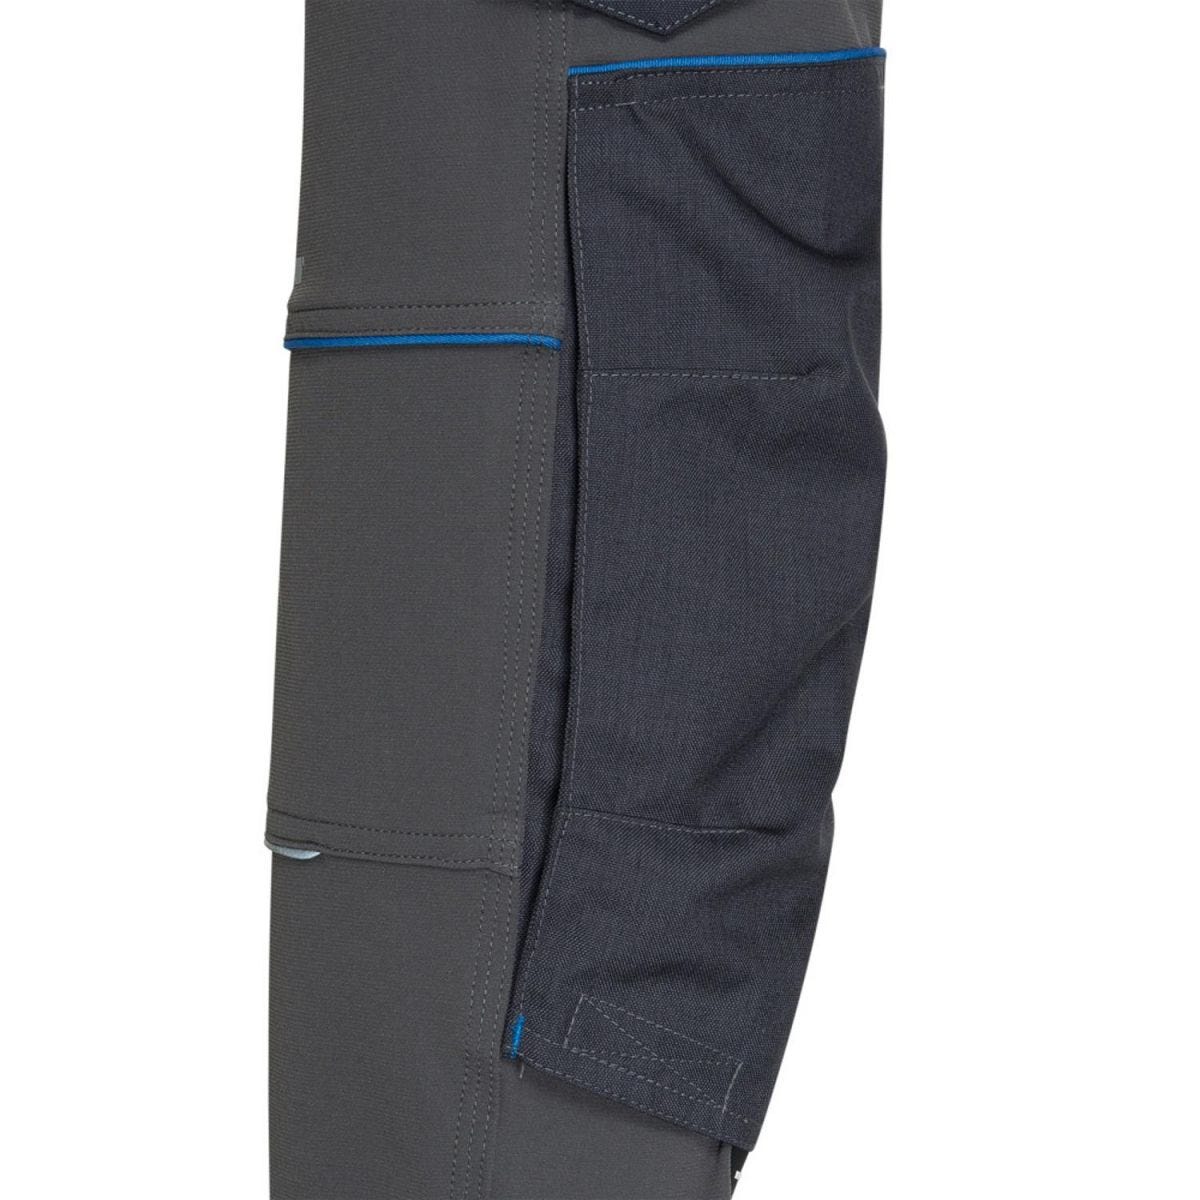 Pantalon de travail SACHA gris/bleu - North Ways - Taille 48 4